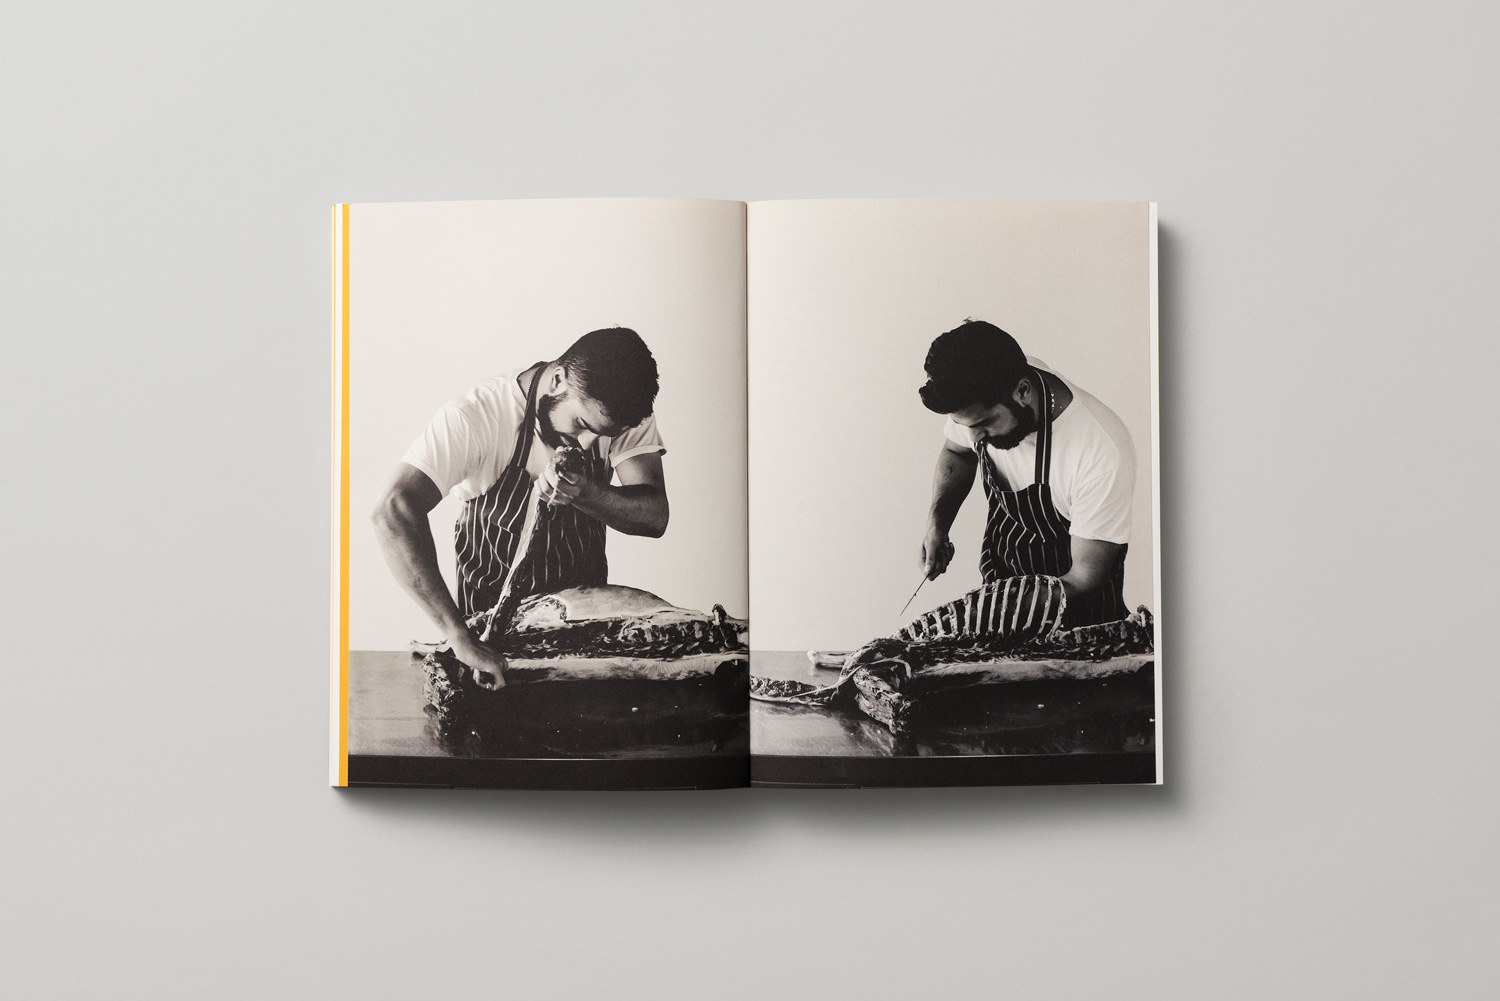 Cazador极简风格的烹饪书籍设计